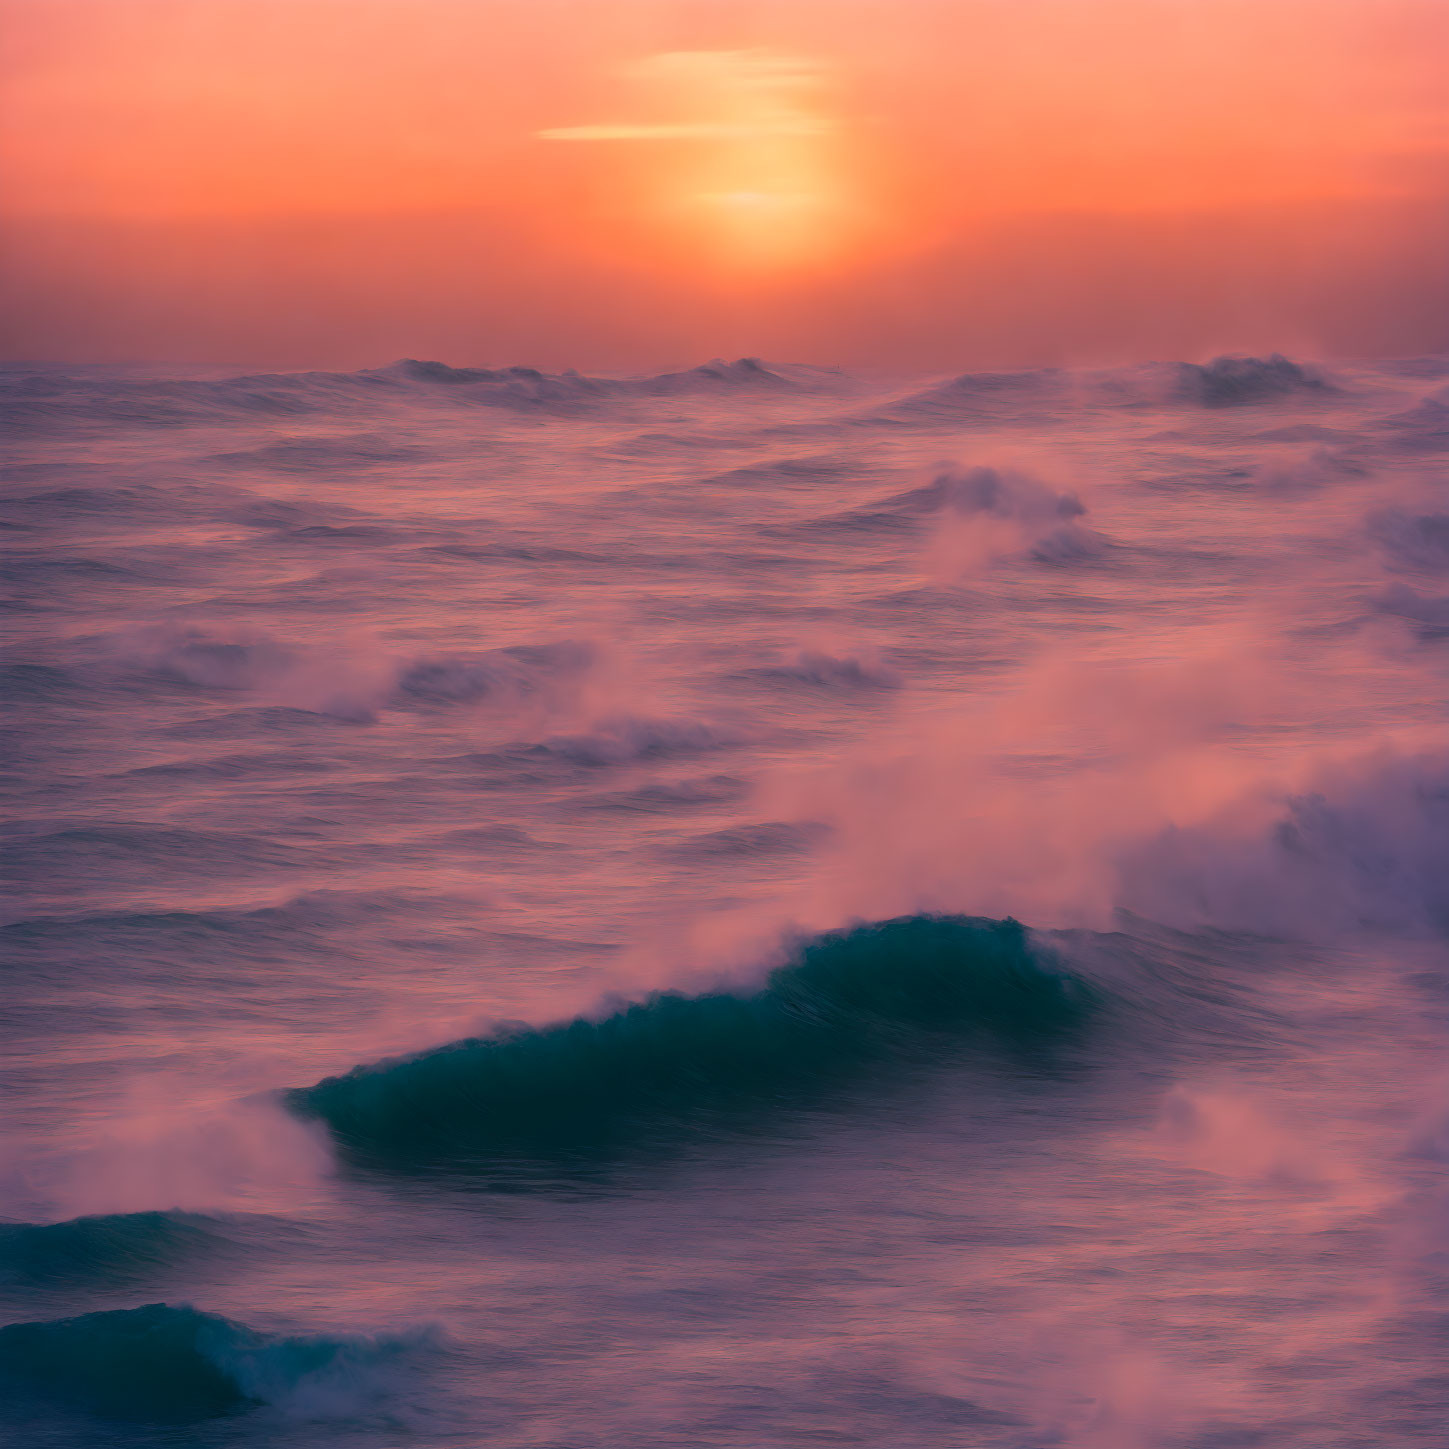 Vibrant sunset over turbulent sea with crashing waves and mystical fog.